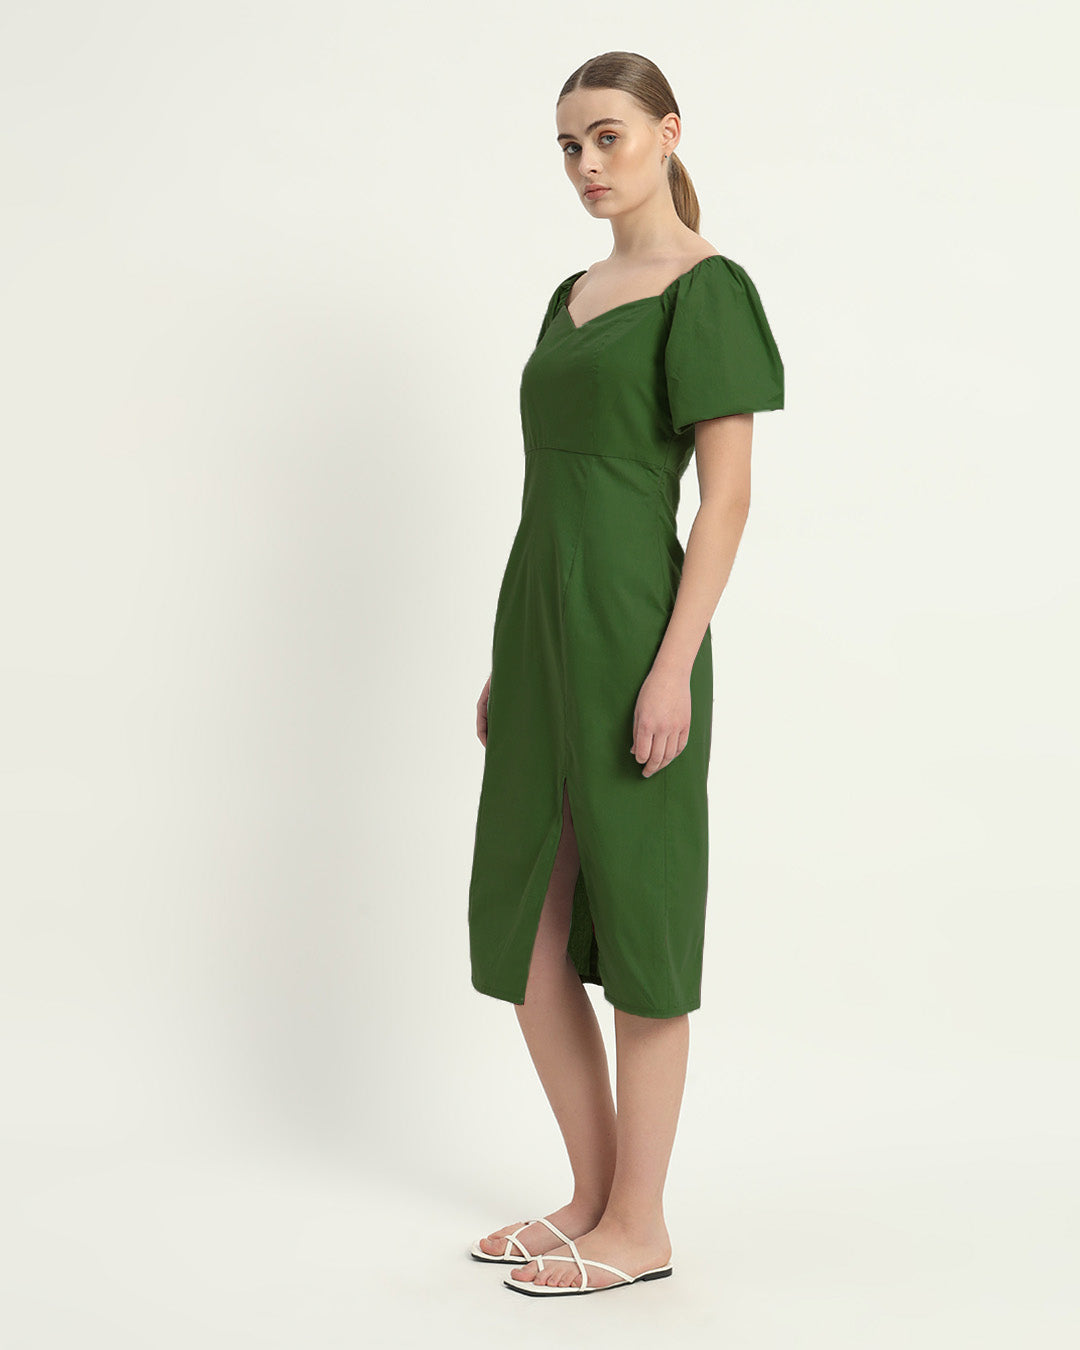 The Erwin Emerald Cotton Dress